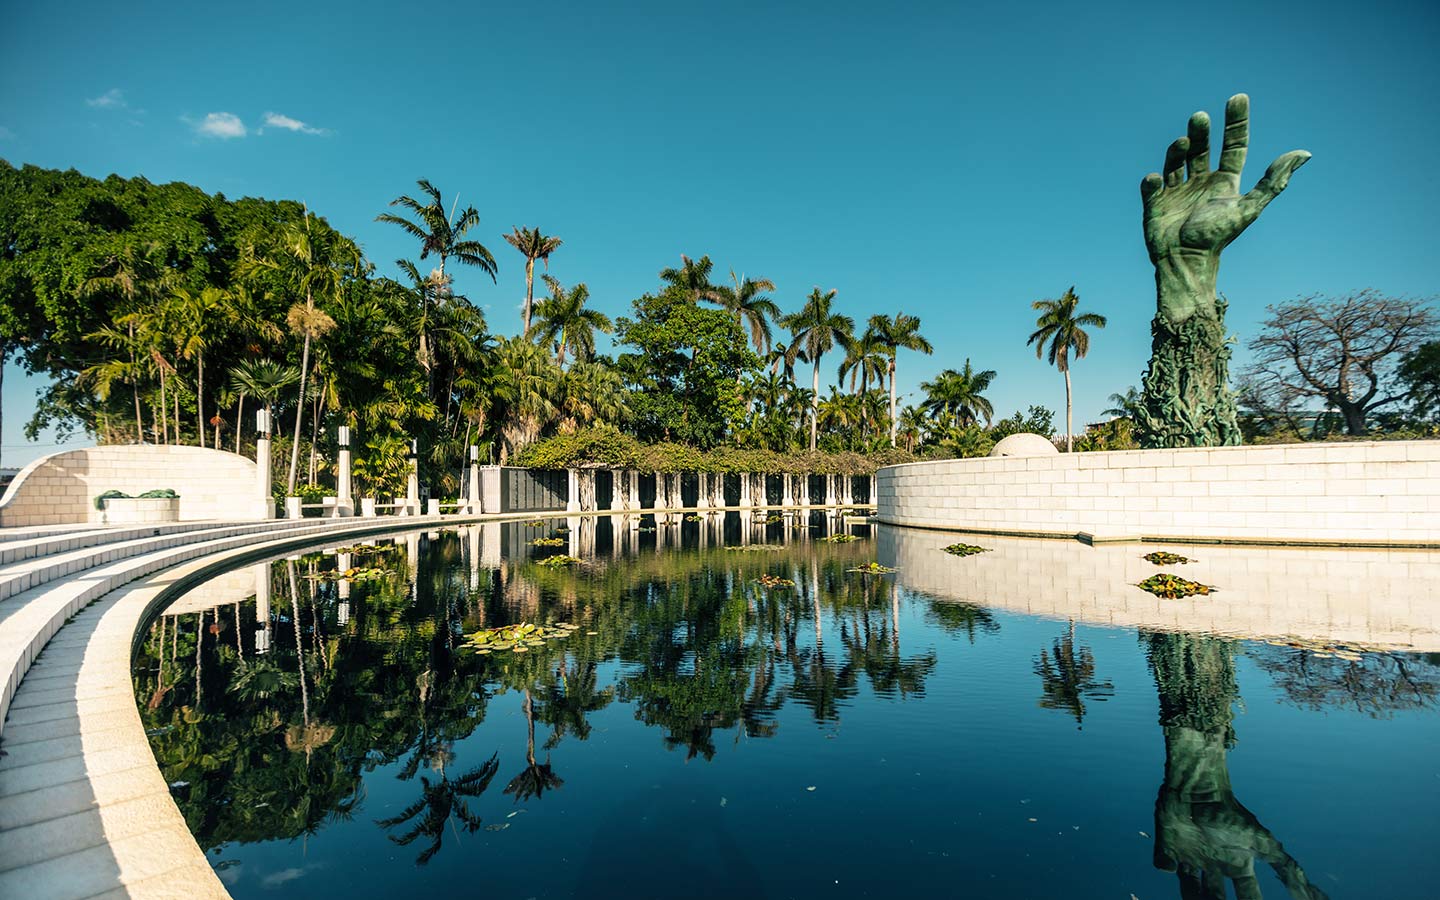 The Holocaust Memorial on Miami Beach